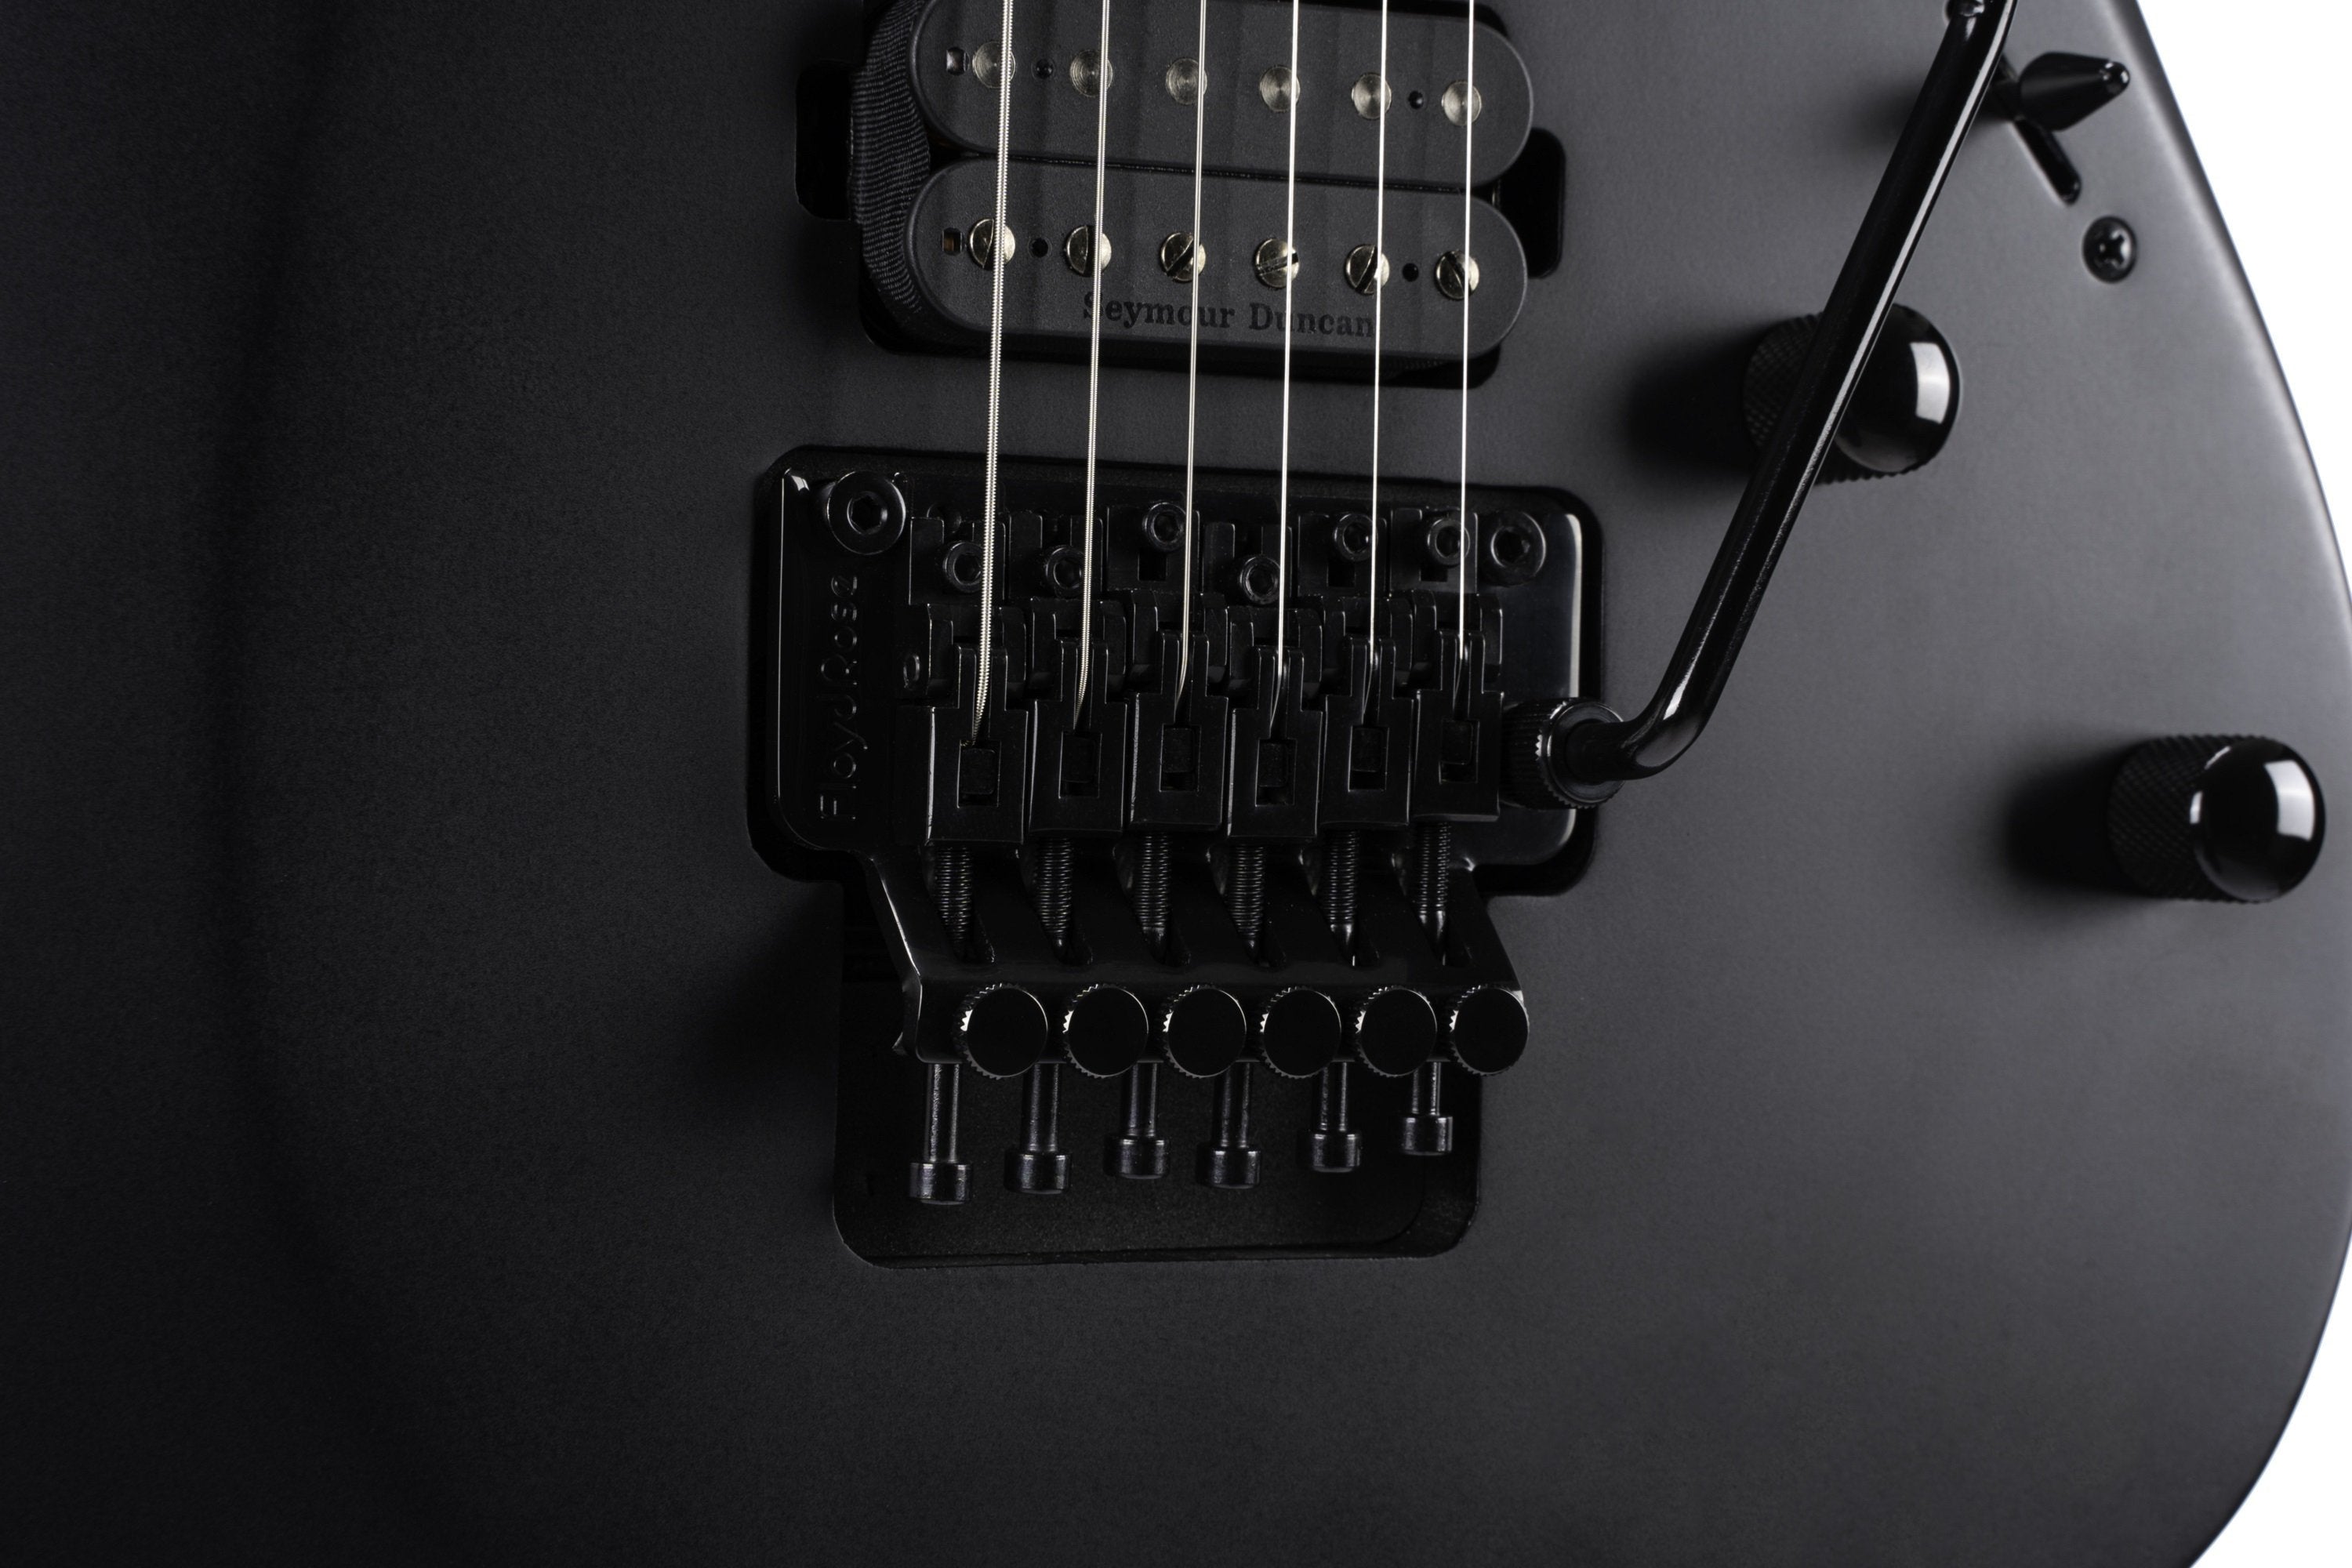 Cort X500 Menace Black Satin, Electric Guitar for sale at Richards Guitars.